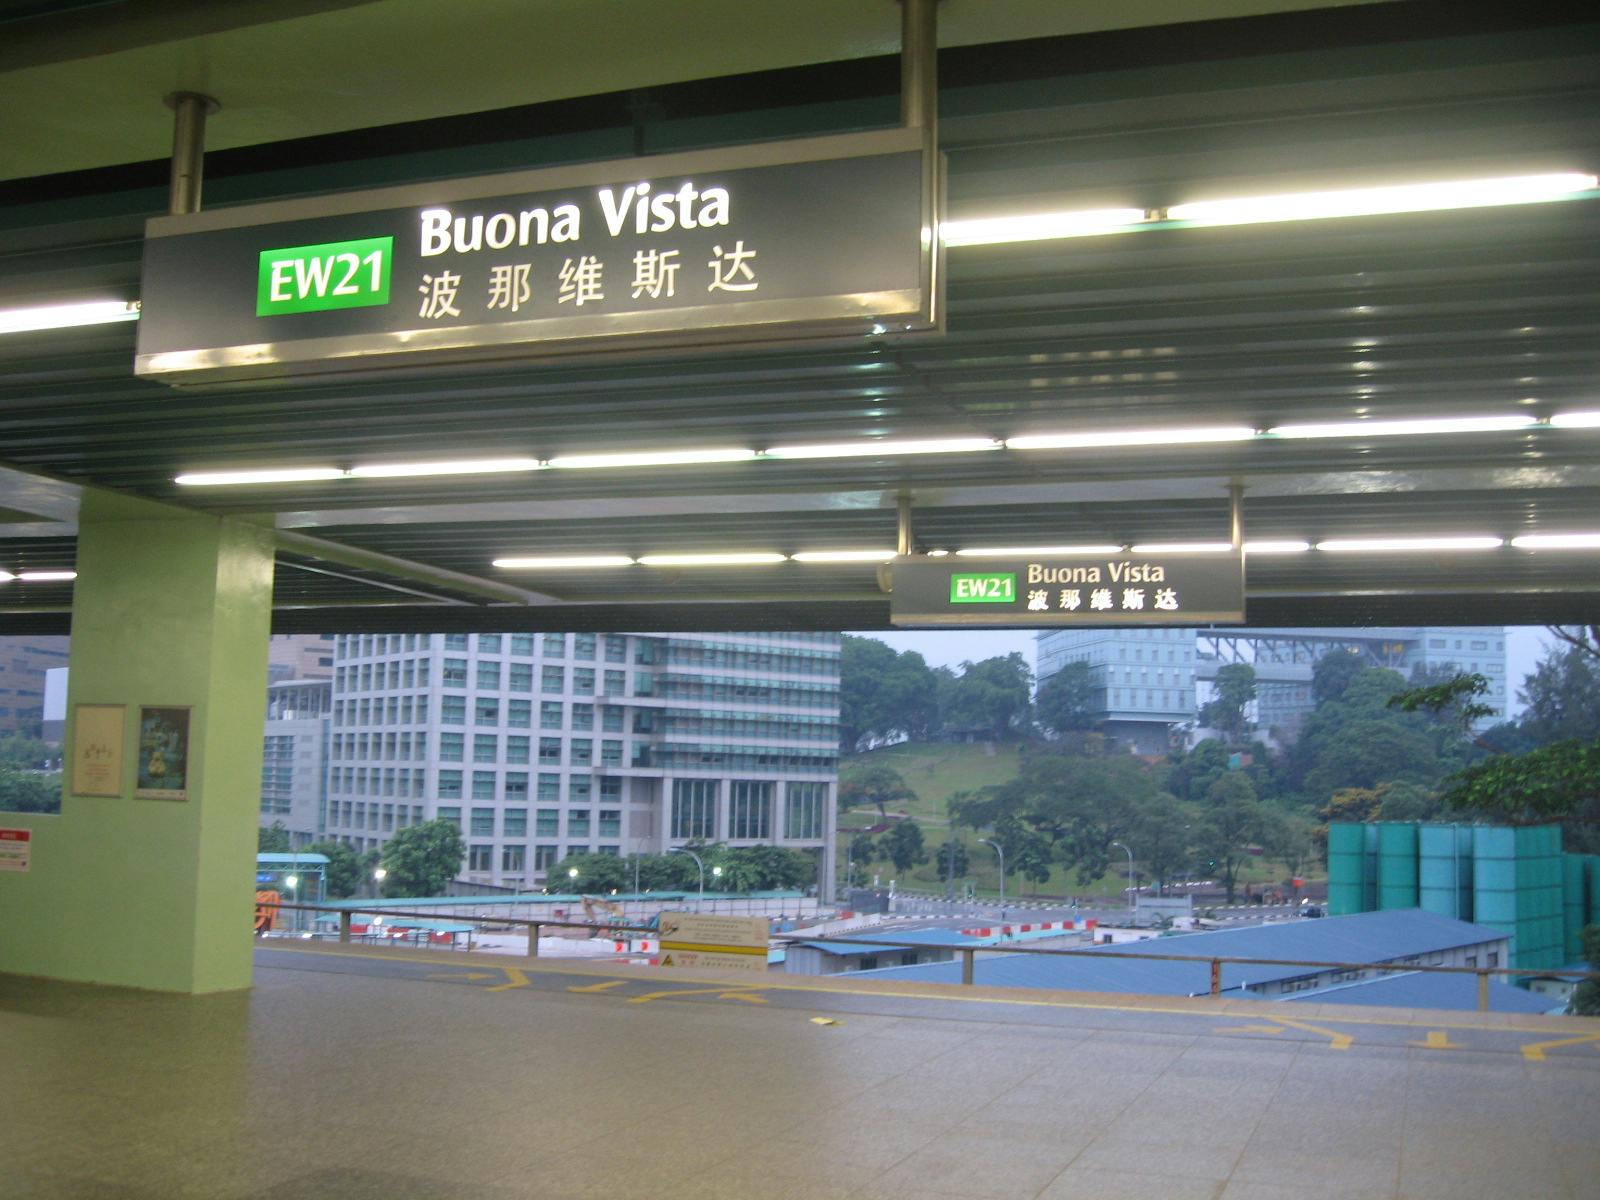 Buona Vista MRT Station